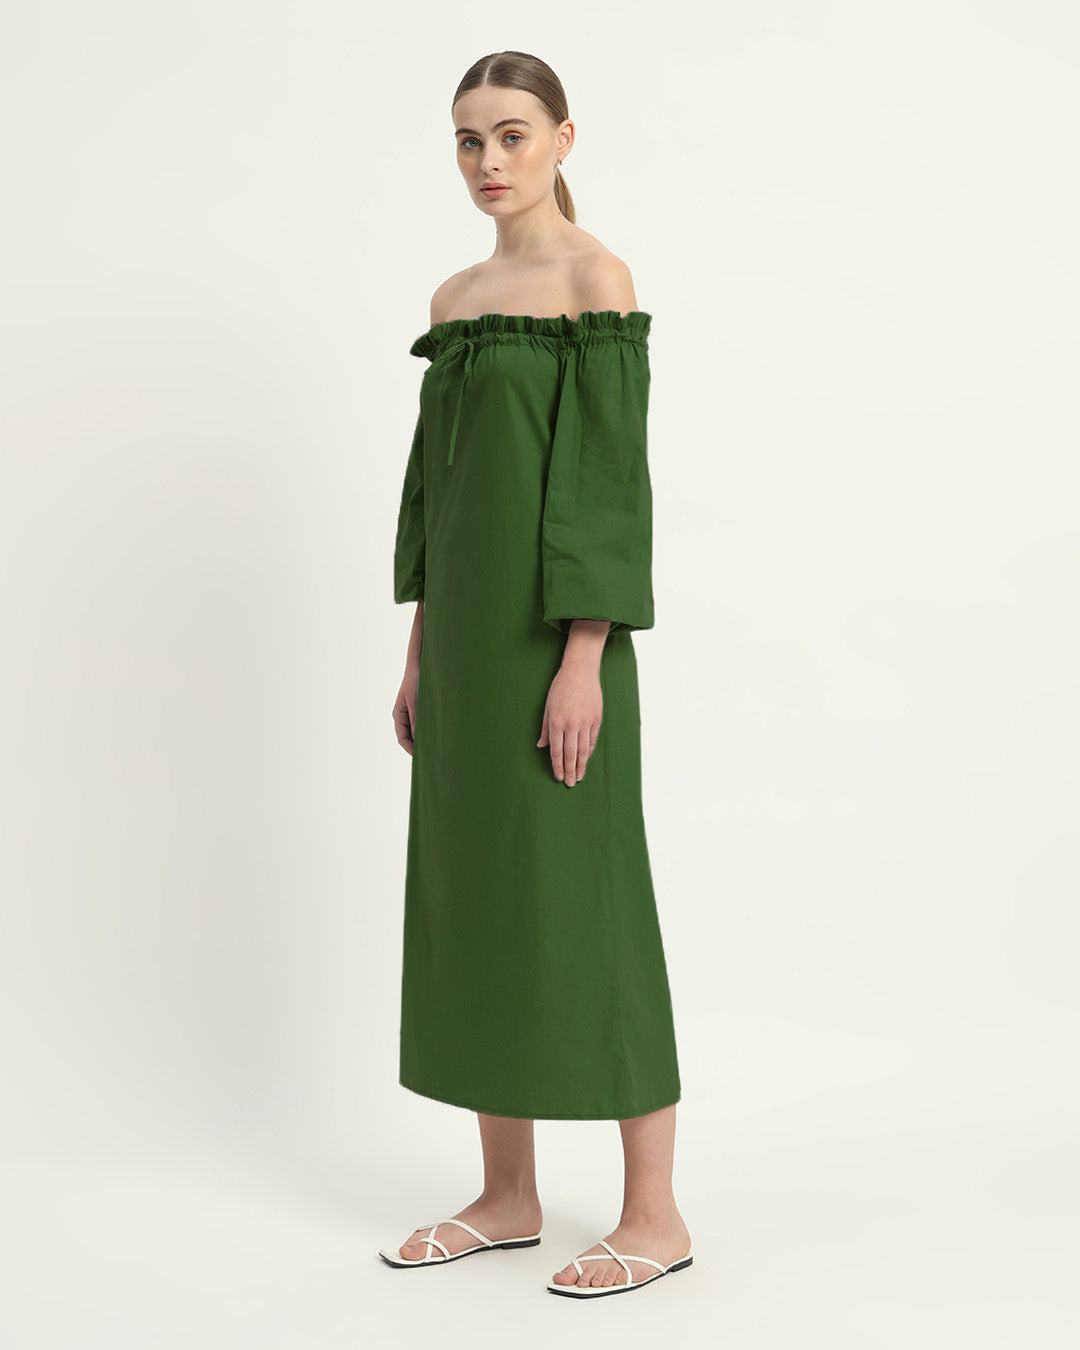 The Carlisle Emerald Cotton Dress